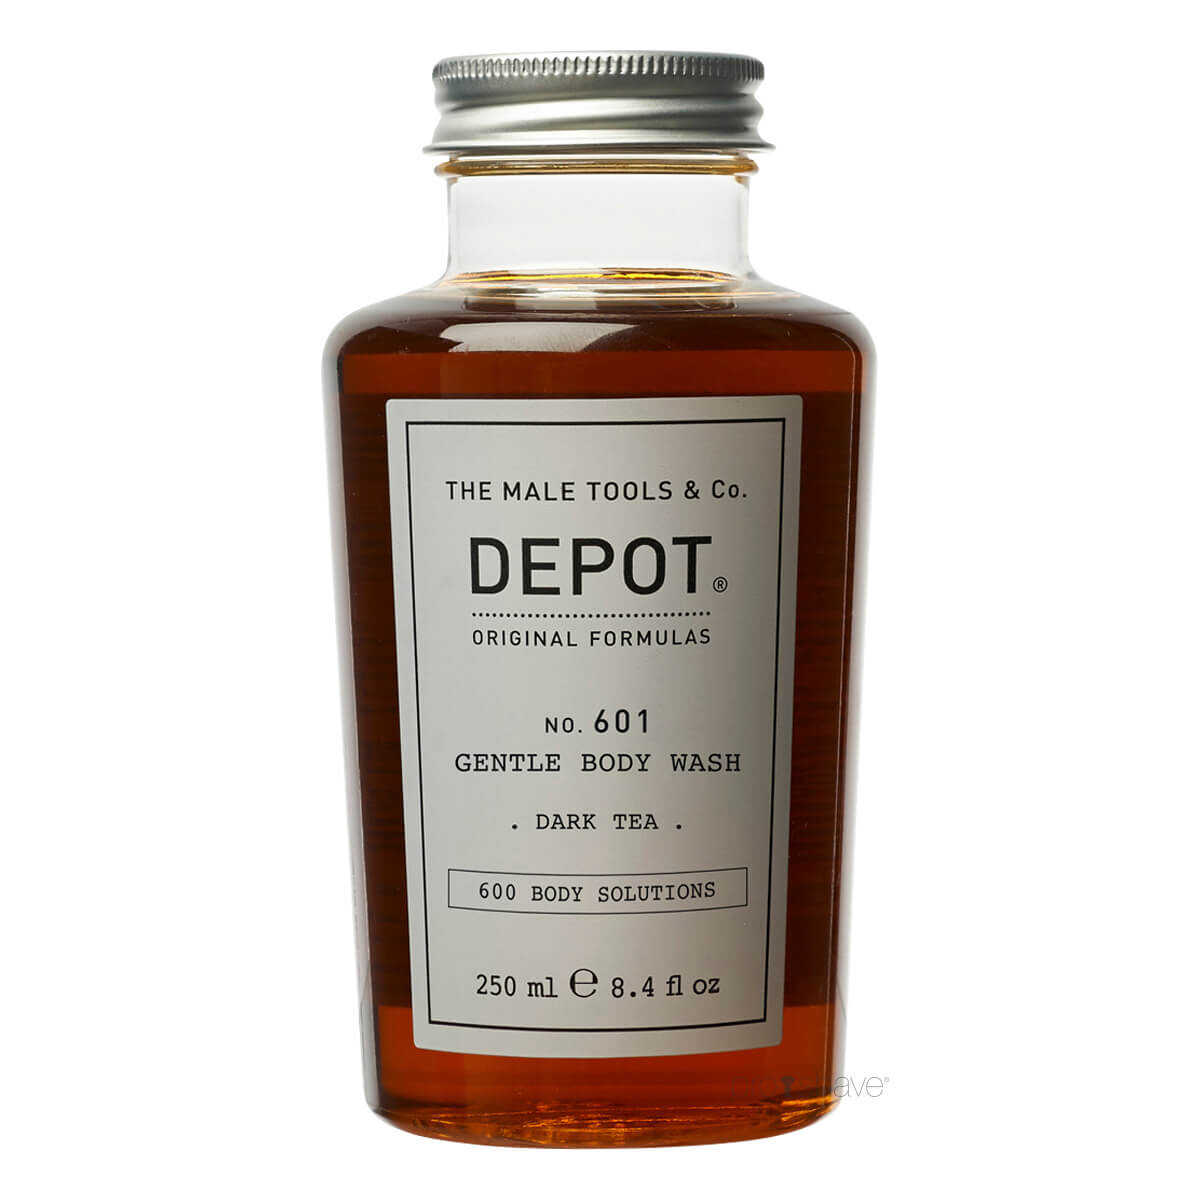 Billede af Depot Gentle Body Wash, Dark Tea, No. 601, 250 ml.